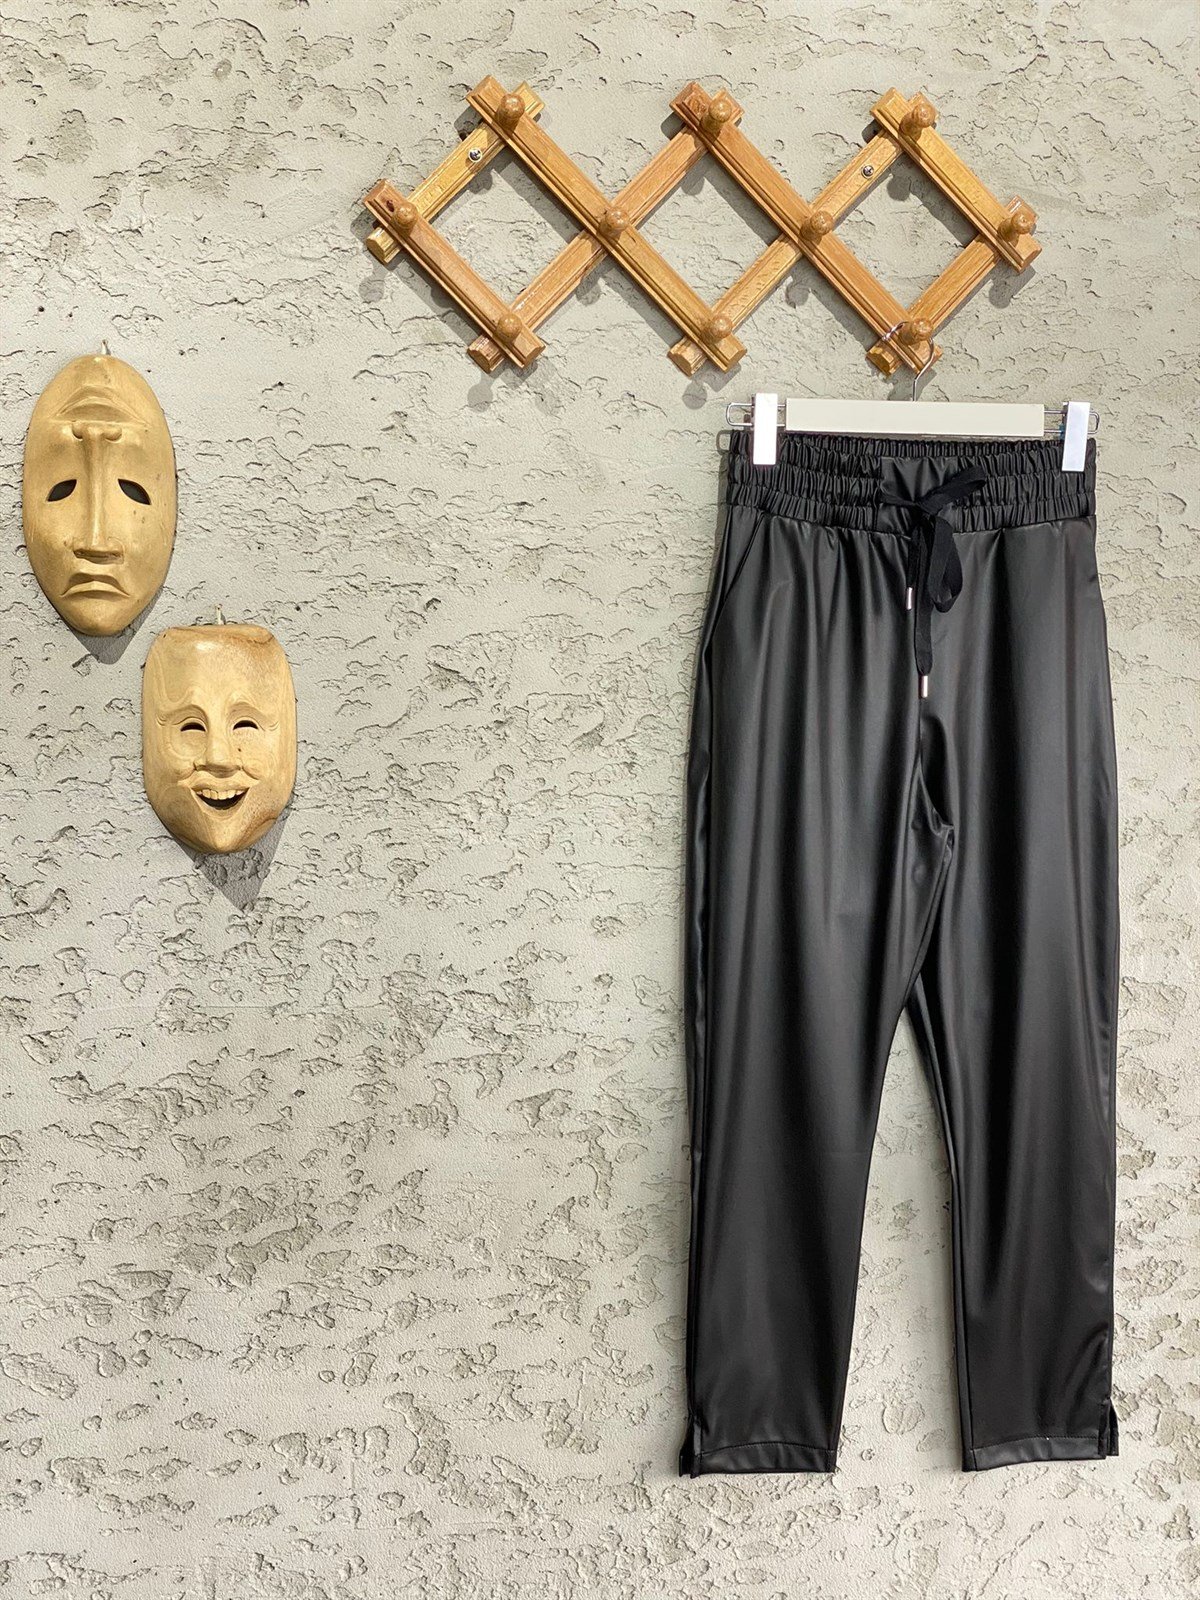 Deri Joger Model Pantolon (Siyah) 379,99 ₺